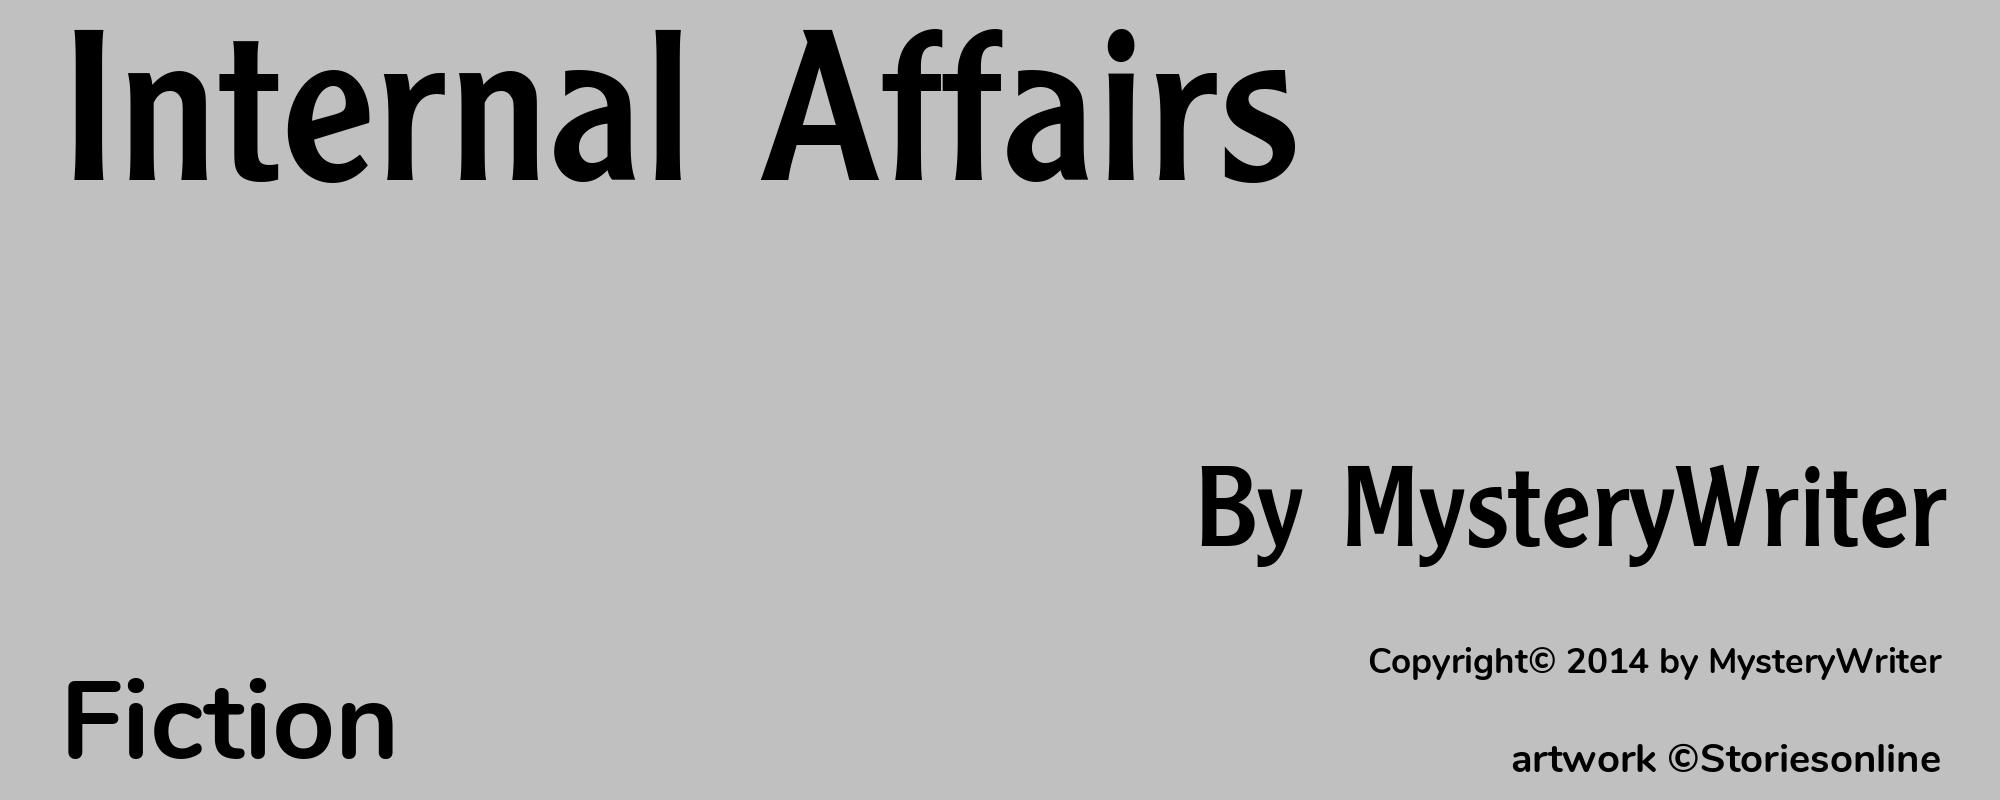 Internal Affairs - Cover